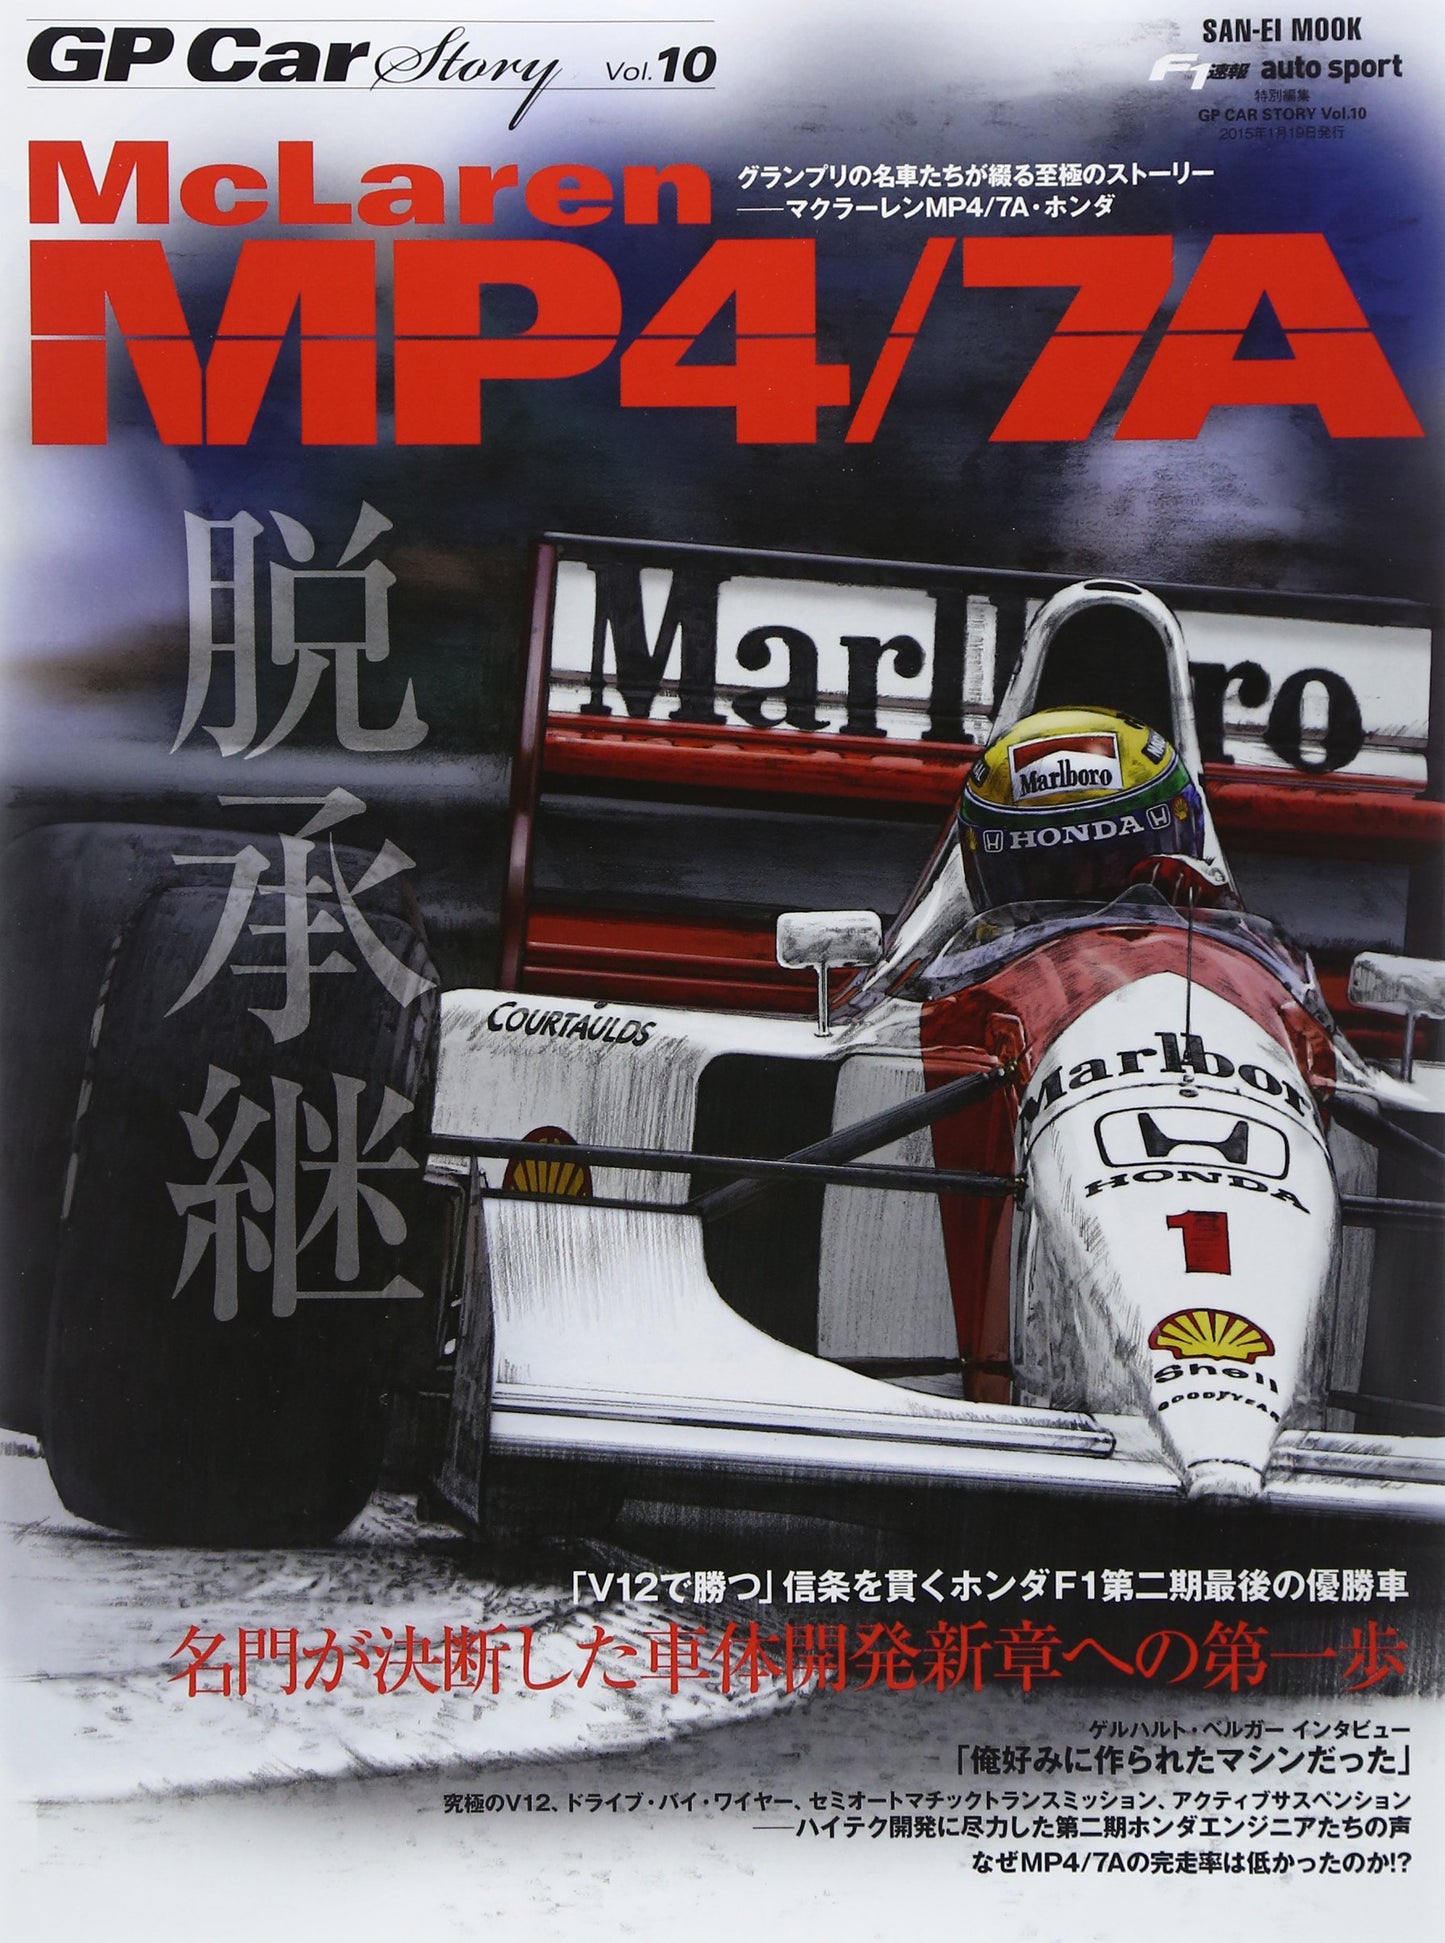 GP CAR STORY Vol. 10 Mclaren MP4/7A